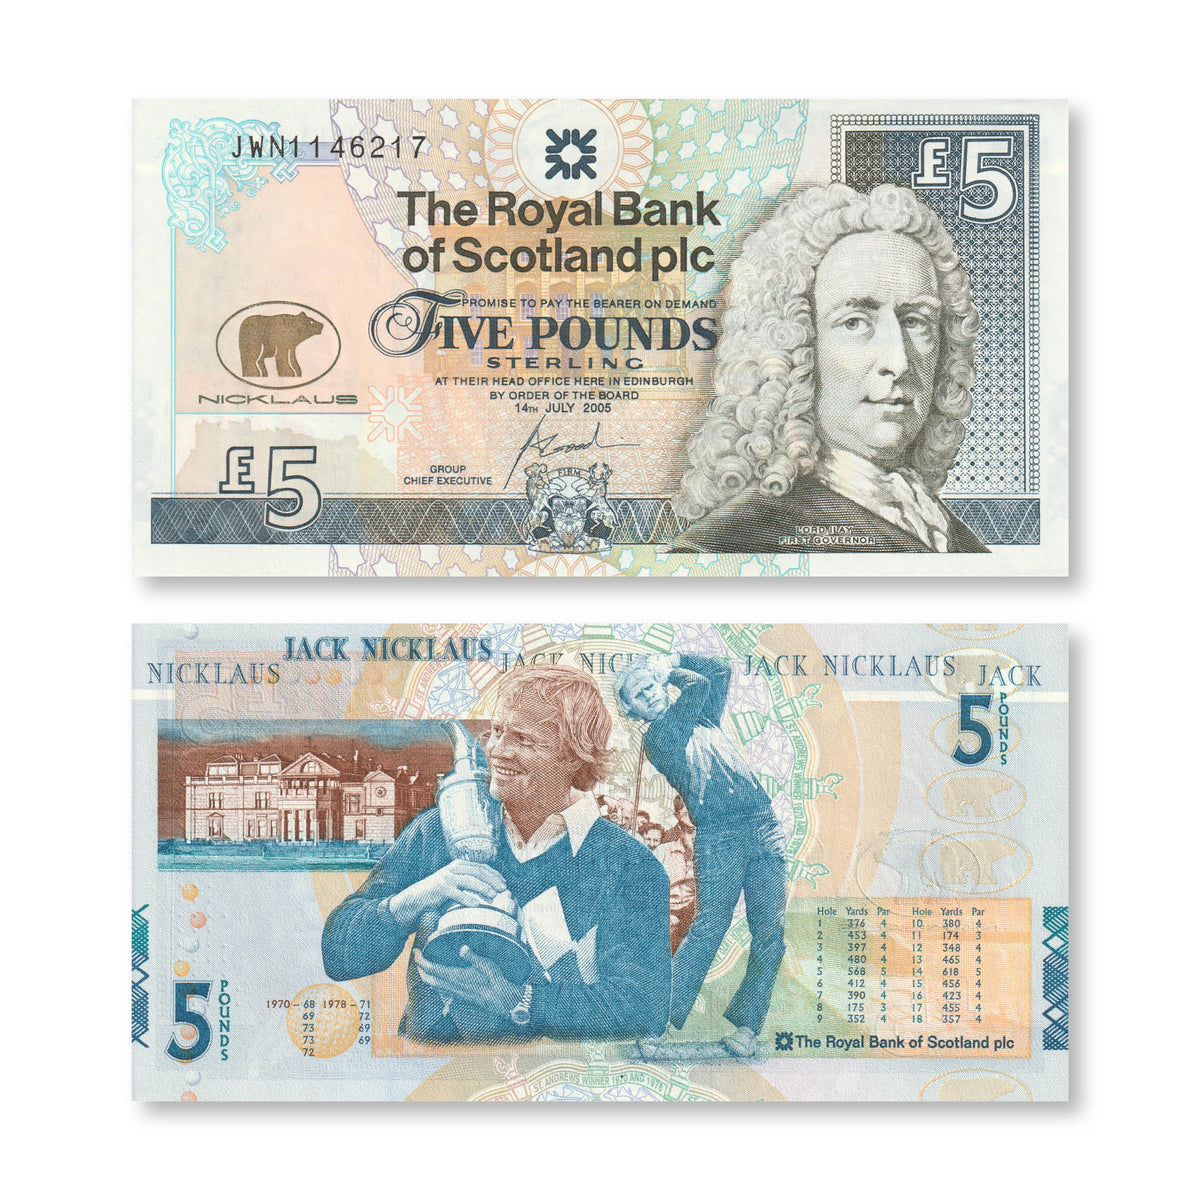 Scotland 5 Pounds, 2005, B502a, P365, UNC - Robert's World Money - World Banknotes